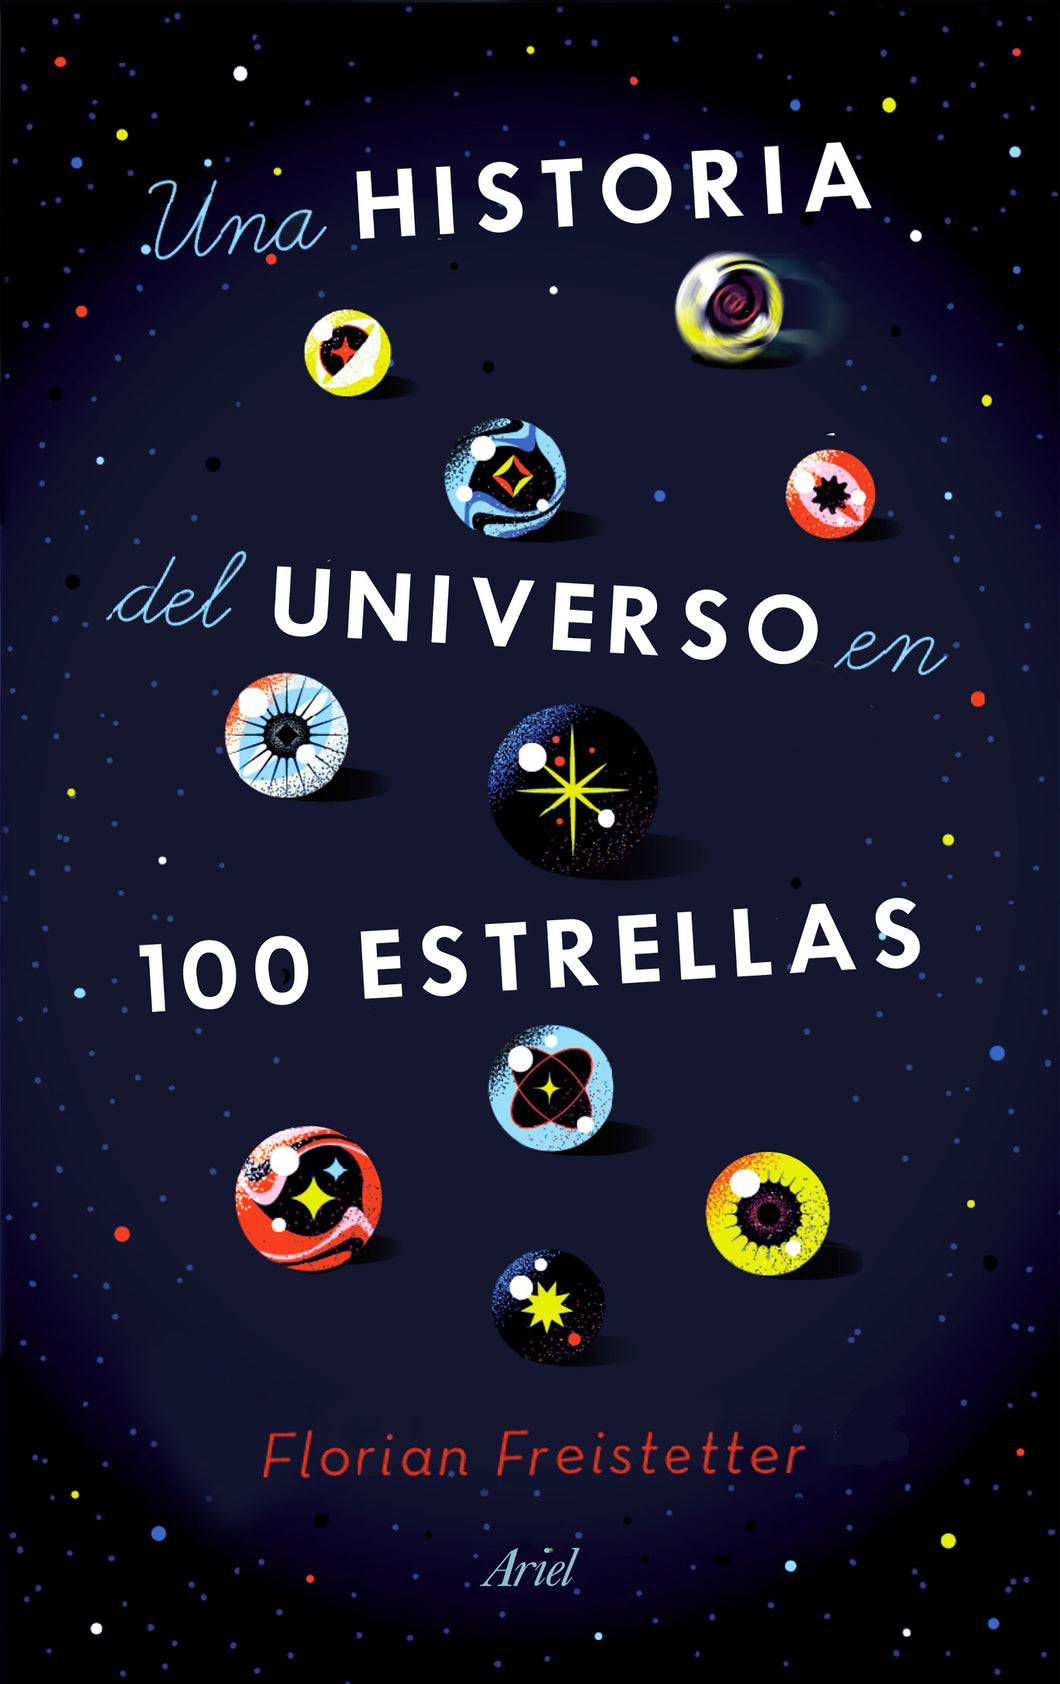 UNA HISTORIA DEL UNIVERSO EN 100 ESTRELLAS - Florian Freistetter